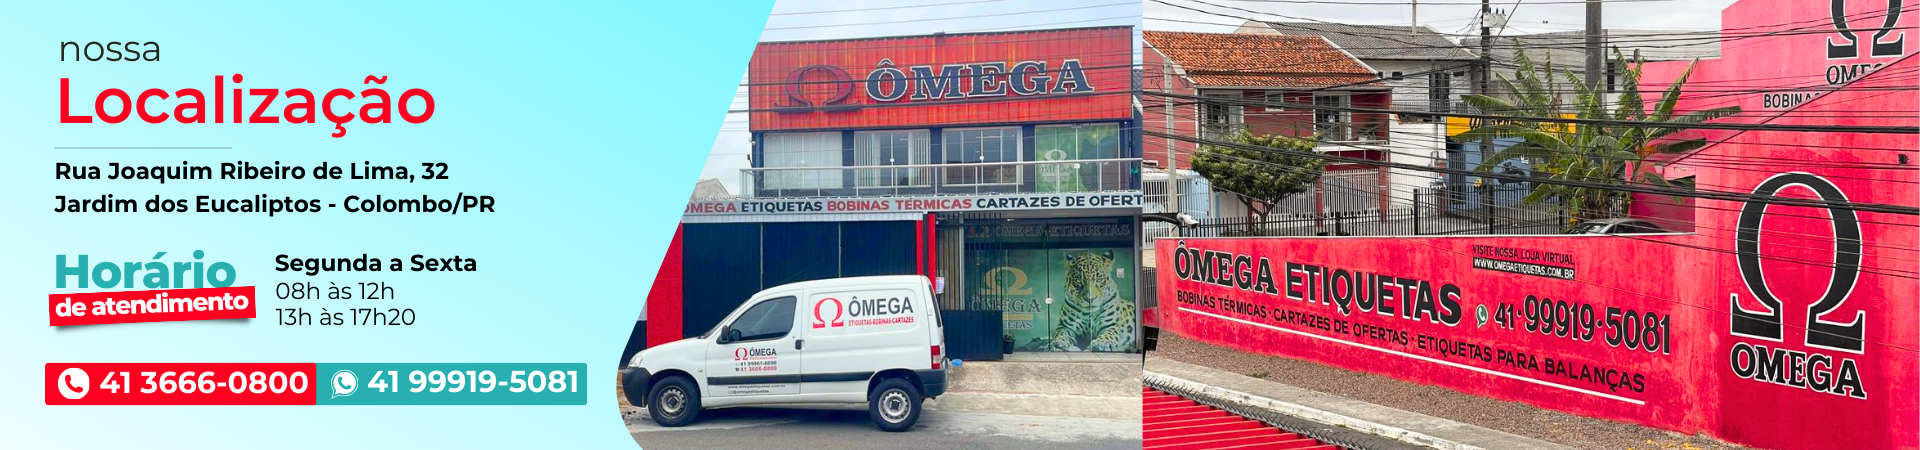 Banner Omega Etiquetas